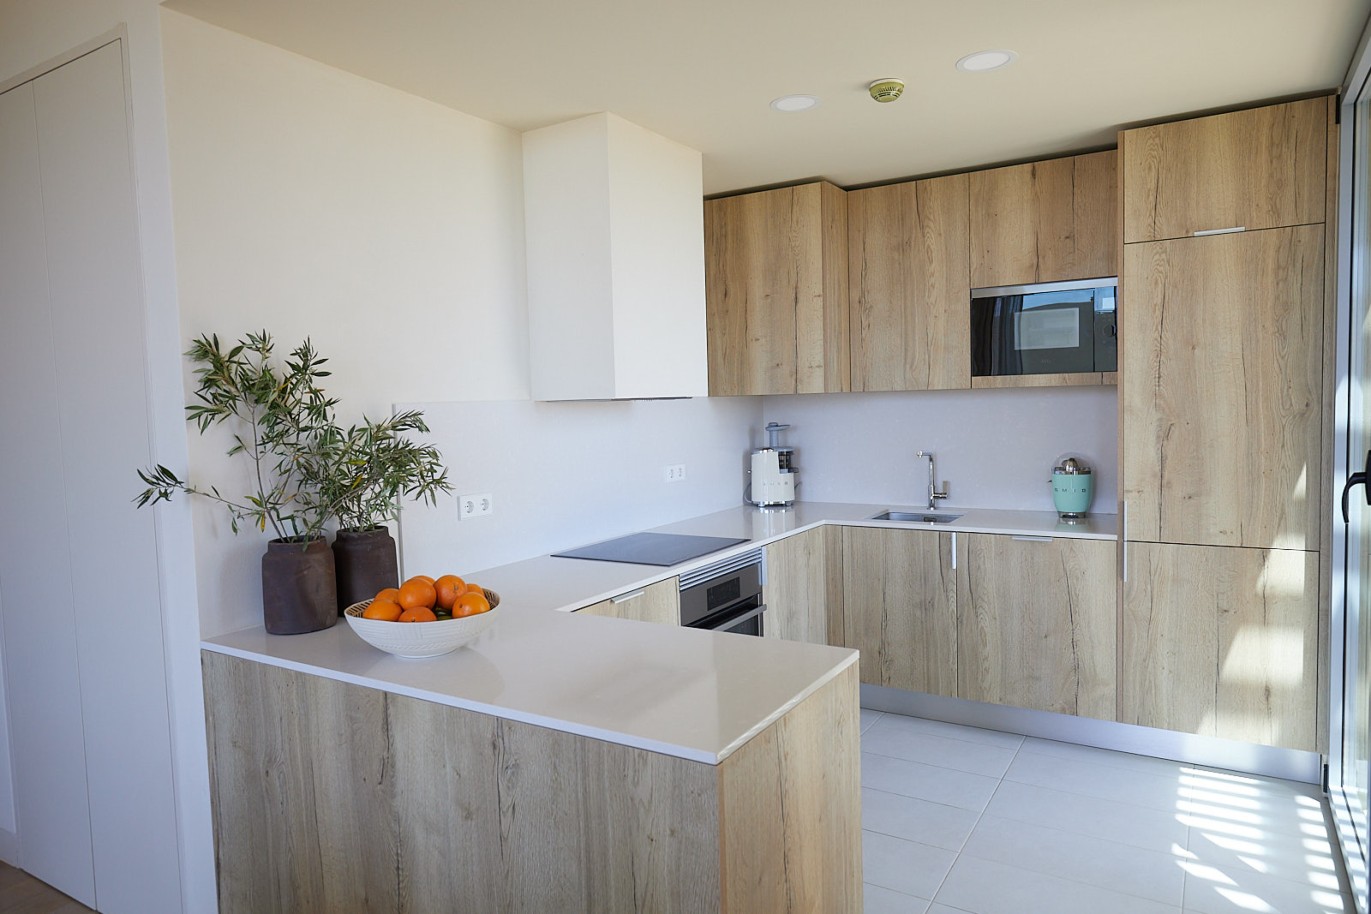 3 bedroom apartment in resort, for sale in Porches, Algarve_230726